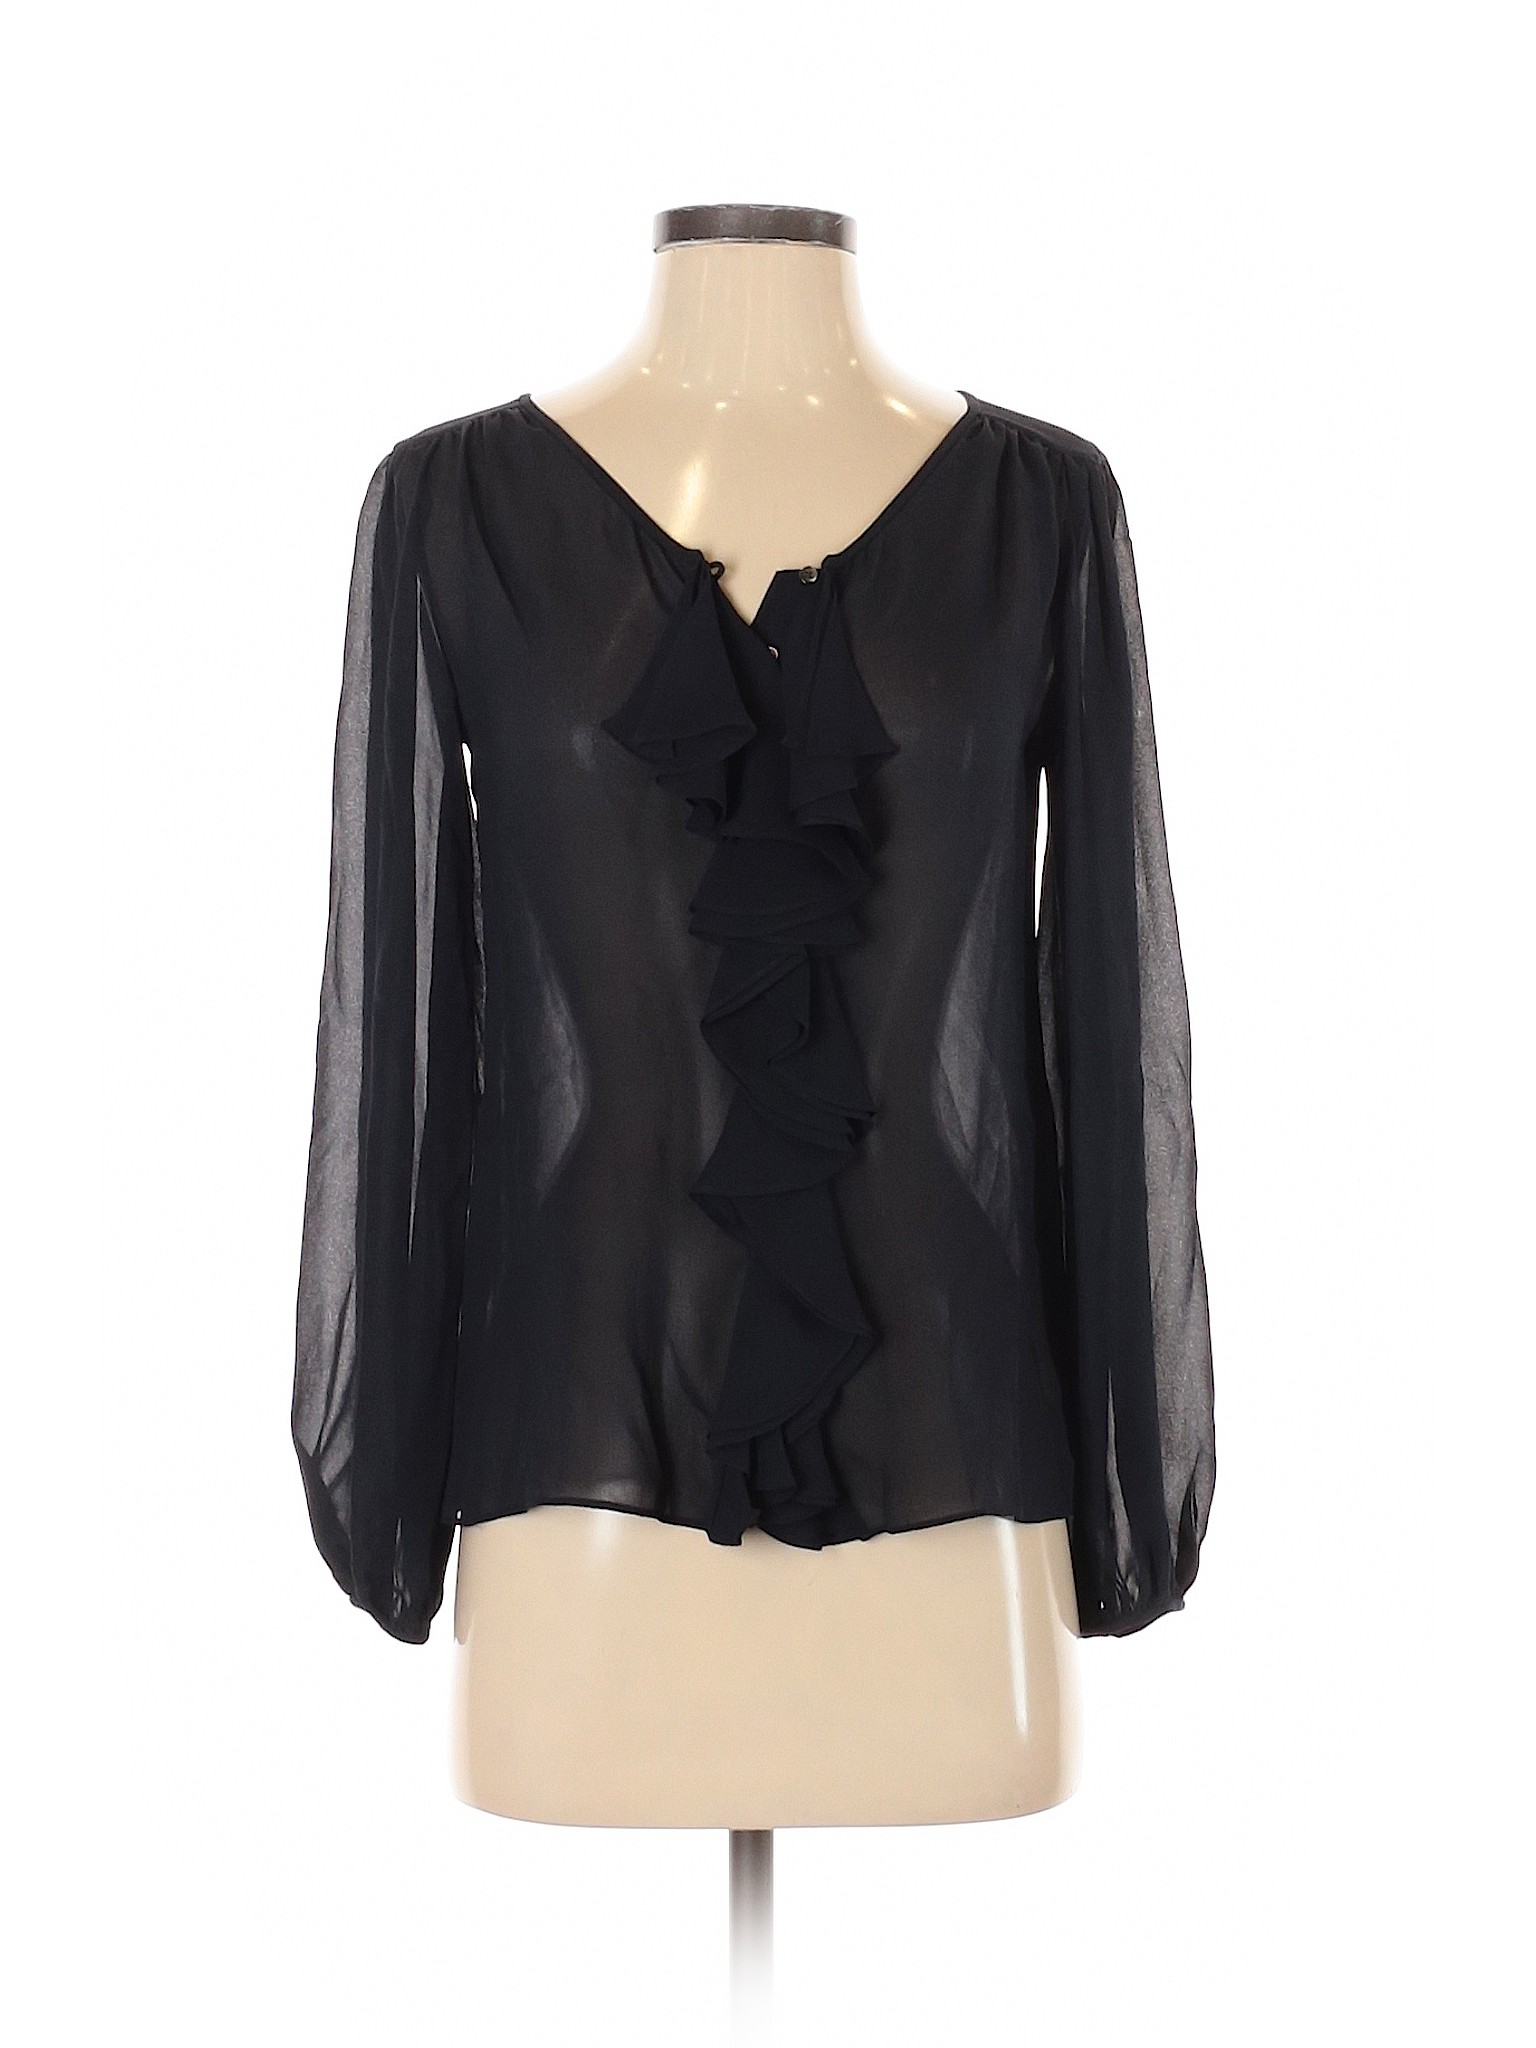 DKNY Women Black Long Sleeve Silk Top 2 | eBay